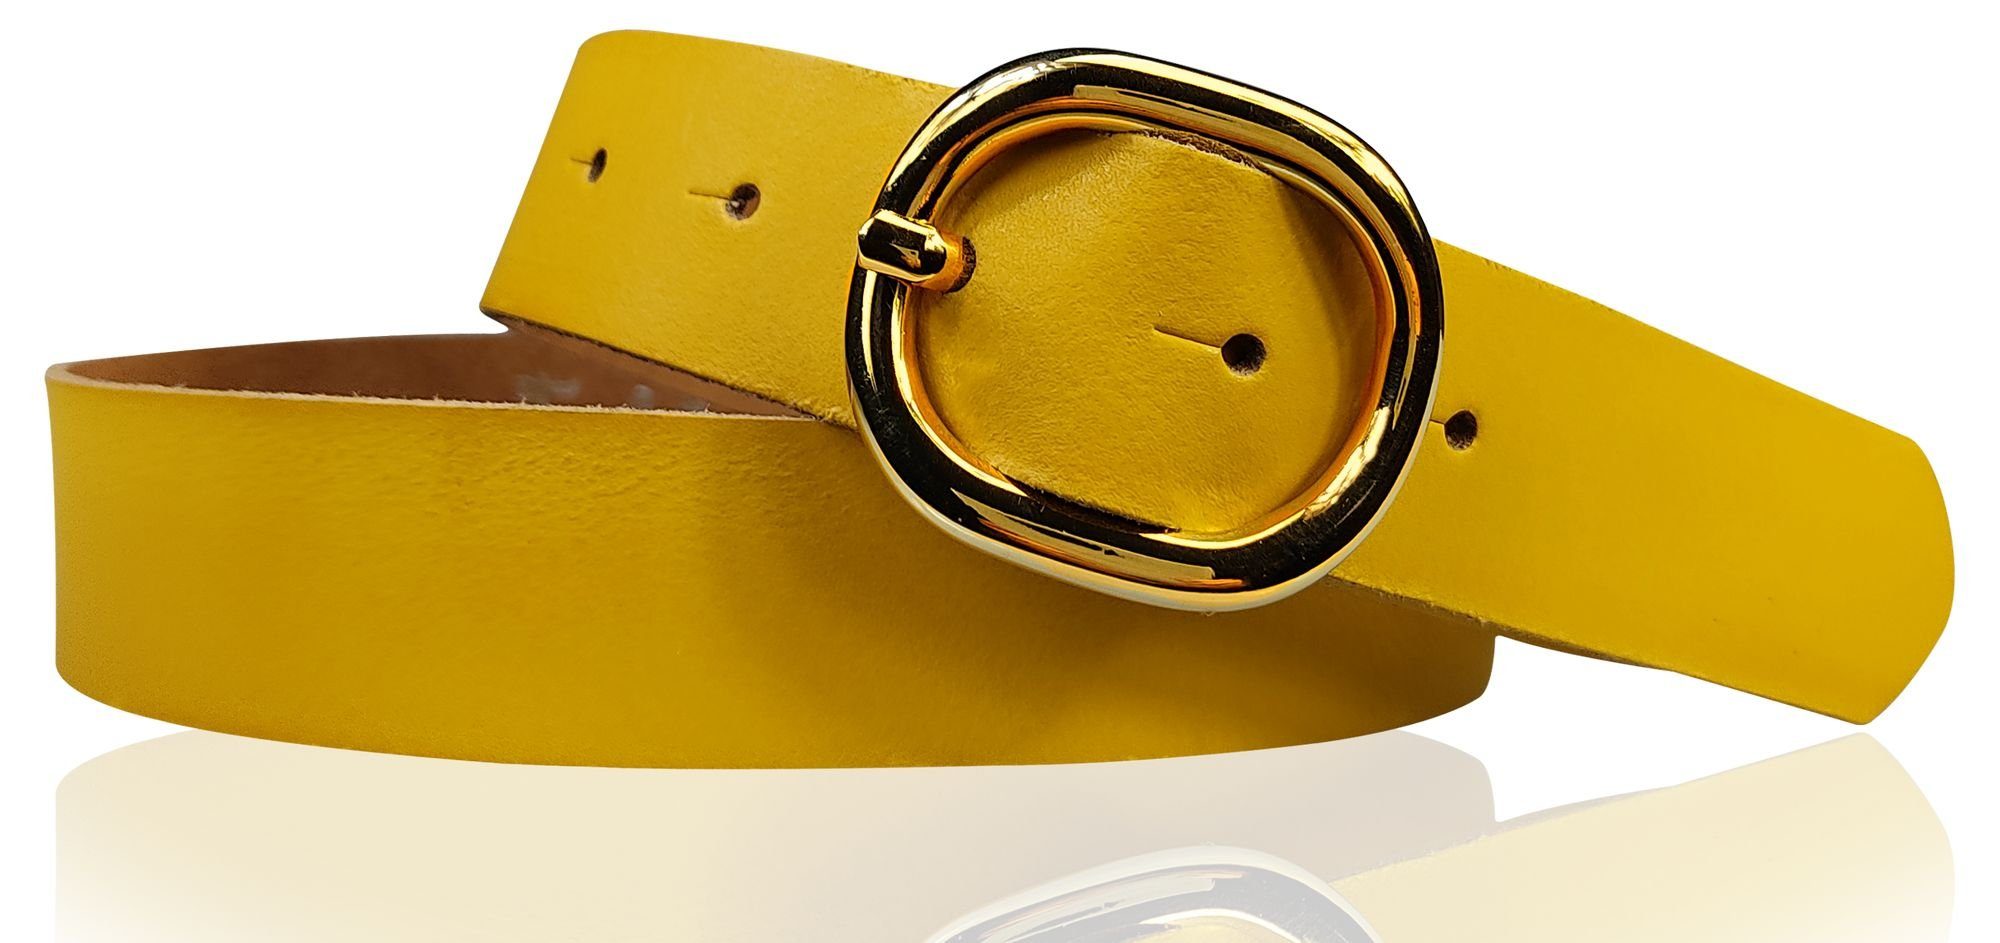 FRONHOFER Hüftgürtel 18621 Damengürtel 3 cm goldene ovale Schnalle, echt Ledergürtel plastikfrei Curry | Hüftgürtel